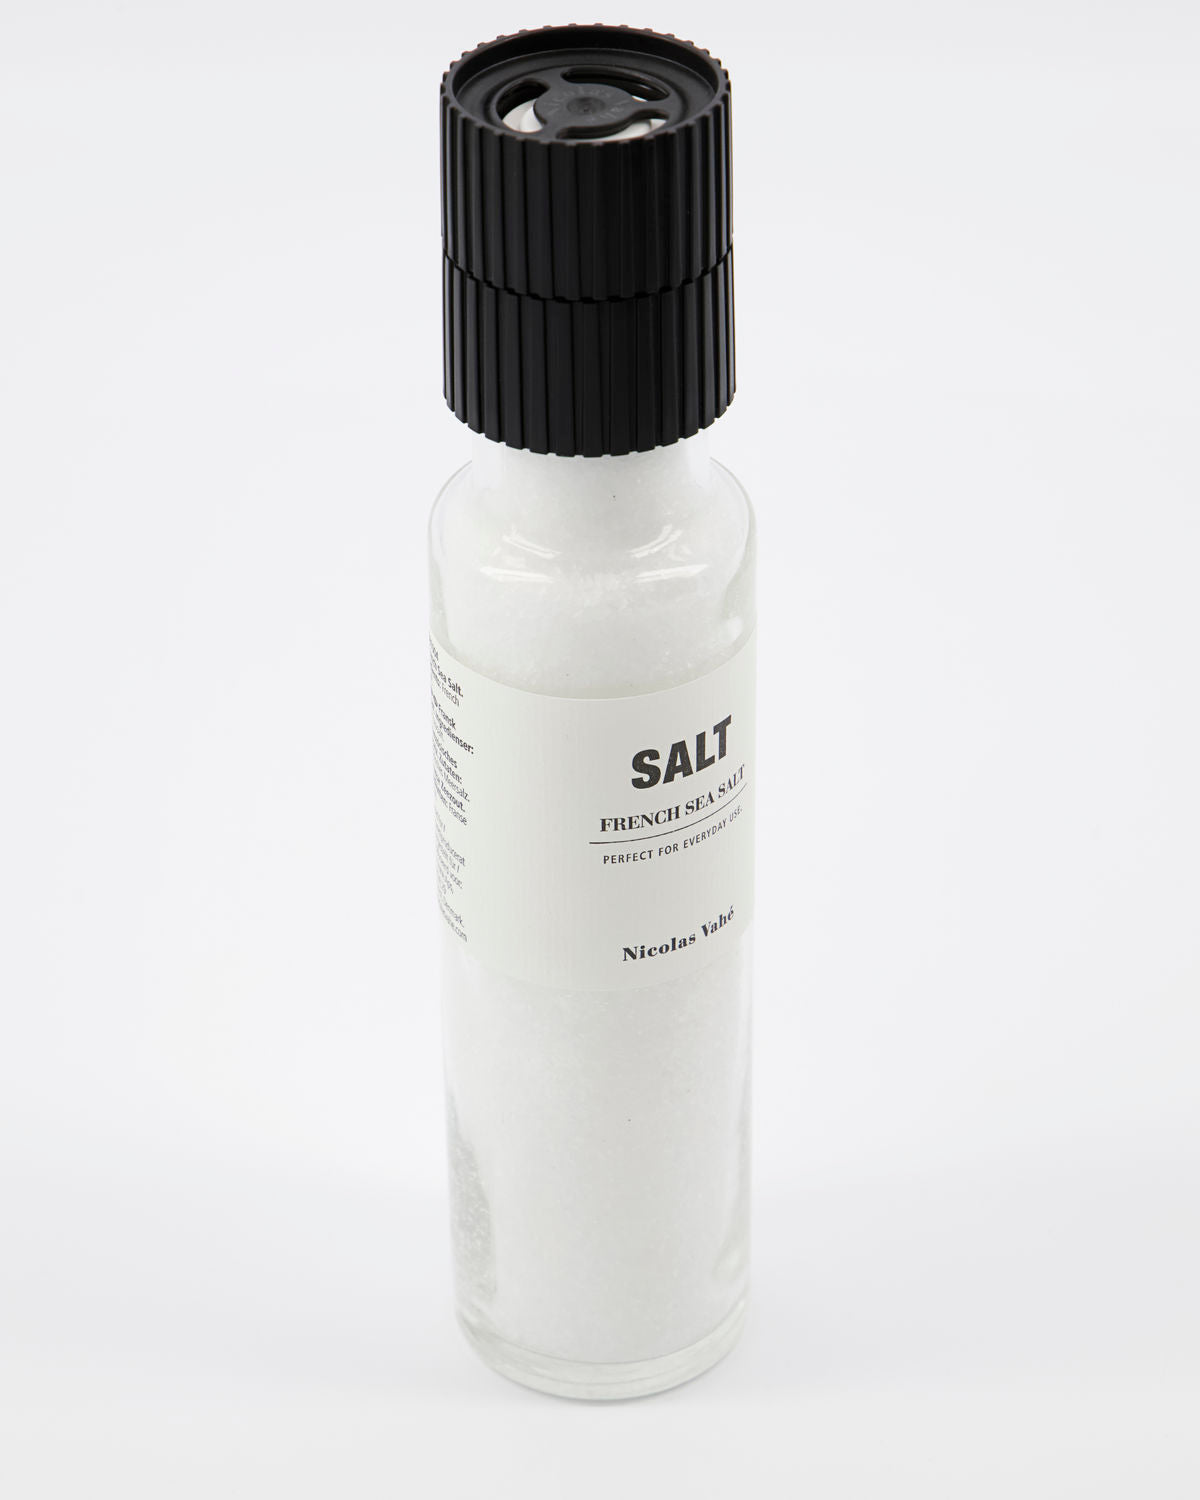 Salt, French Sea Café Society